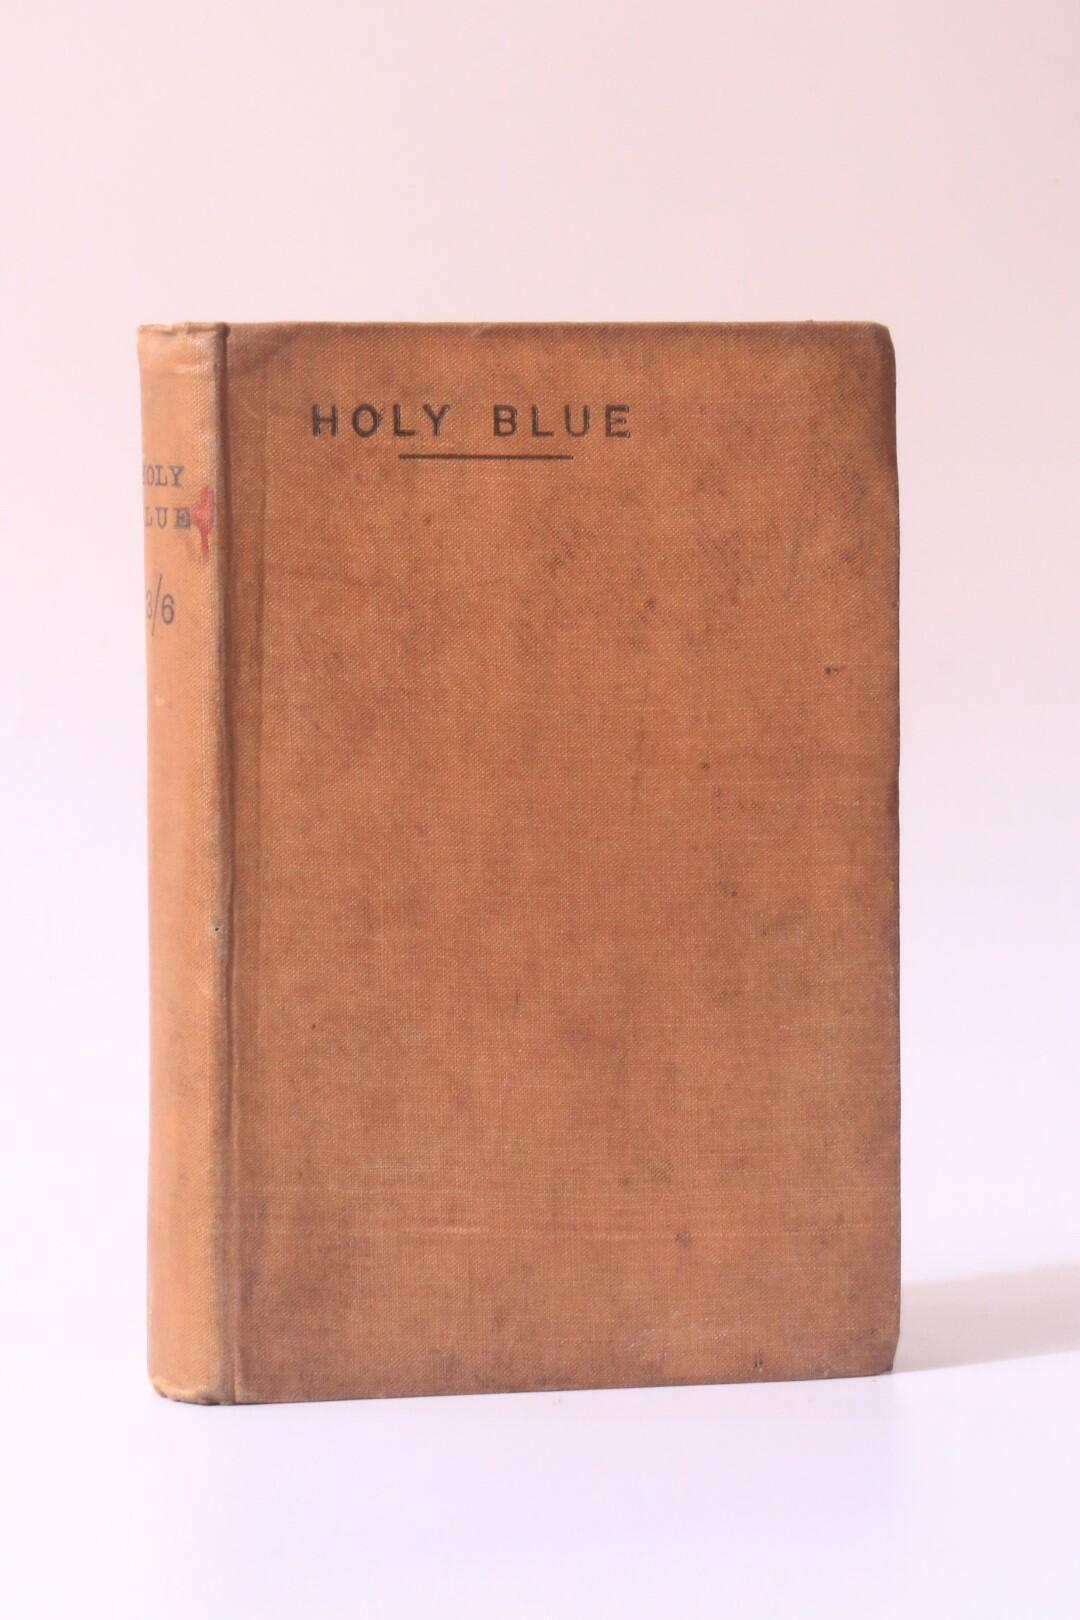 Alphonse de Florian - Holy Blue! - Ye Leadenhalle Presse; Field & Tuer, Simpkin Marshall, Hamilton Adams, nd [1884], First Edition.